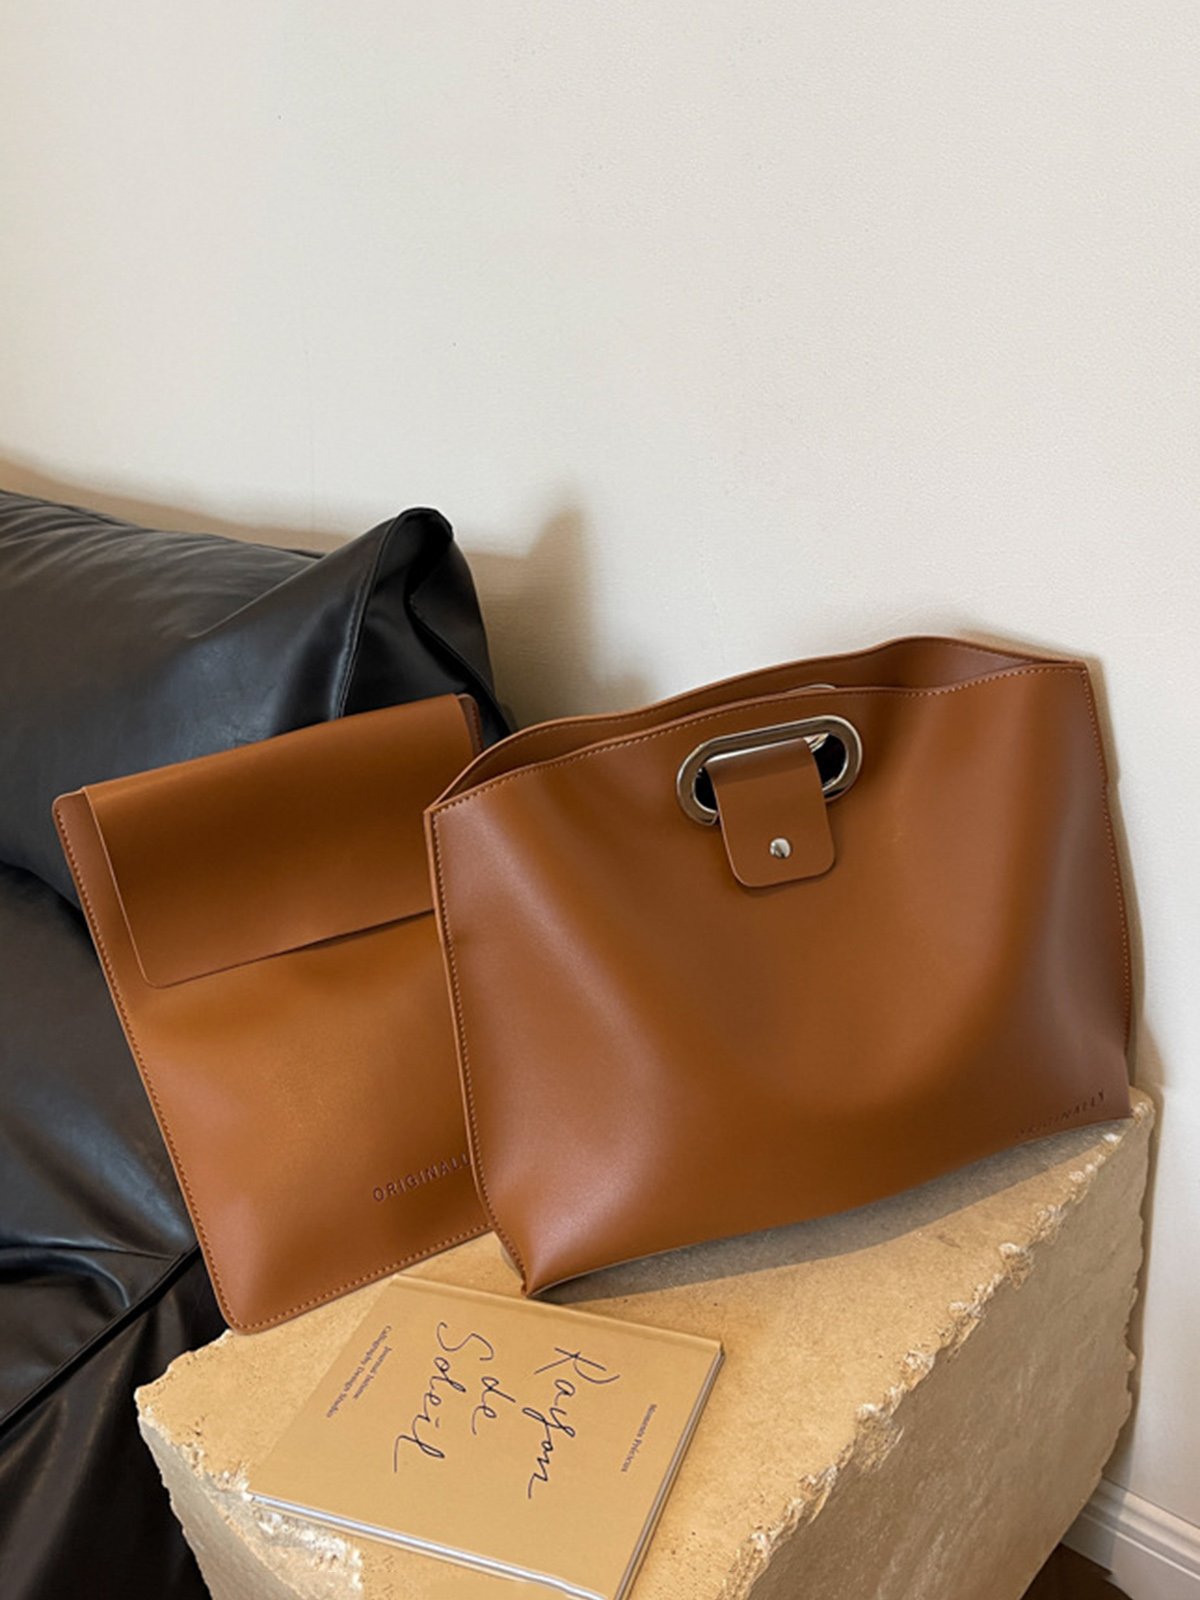 Large Capacity Clutch Bag Commuting Handbag With Small Bag Inside